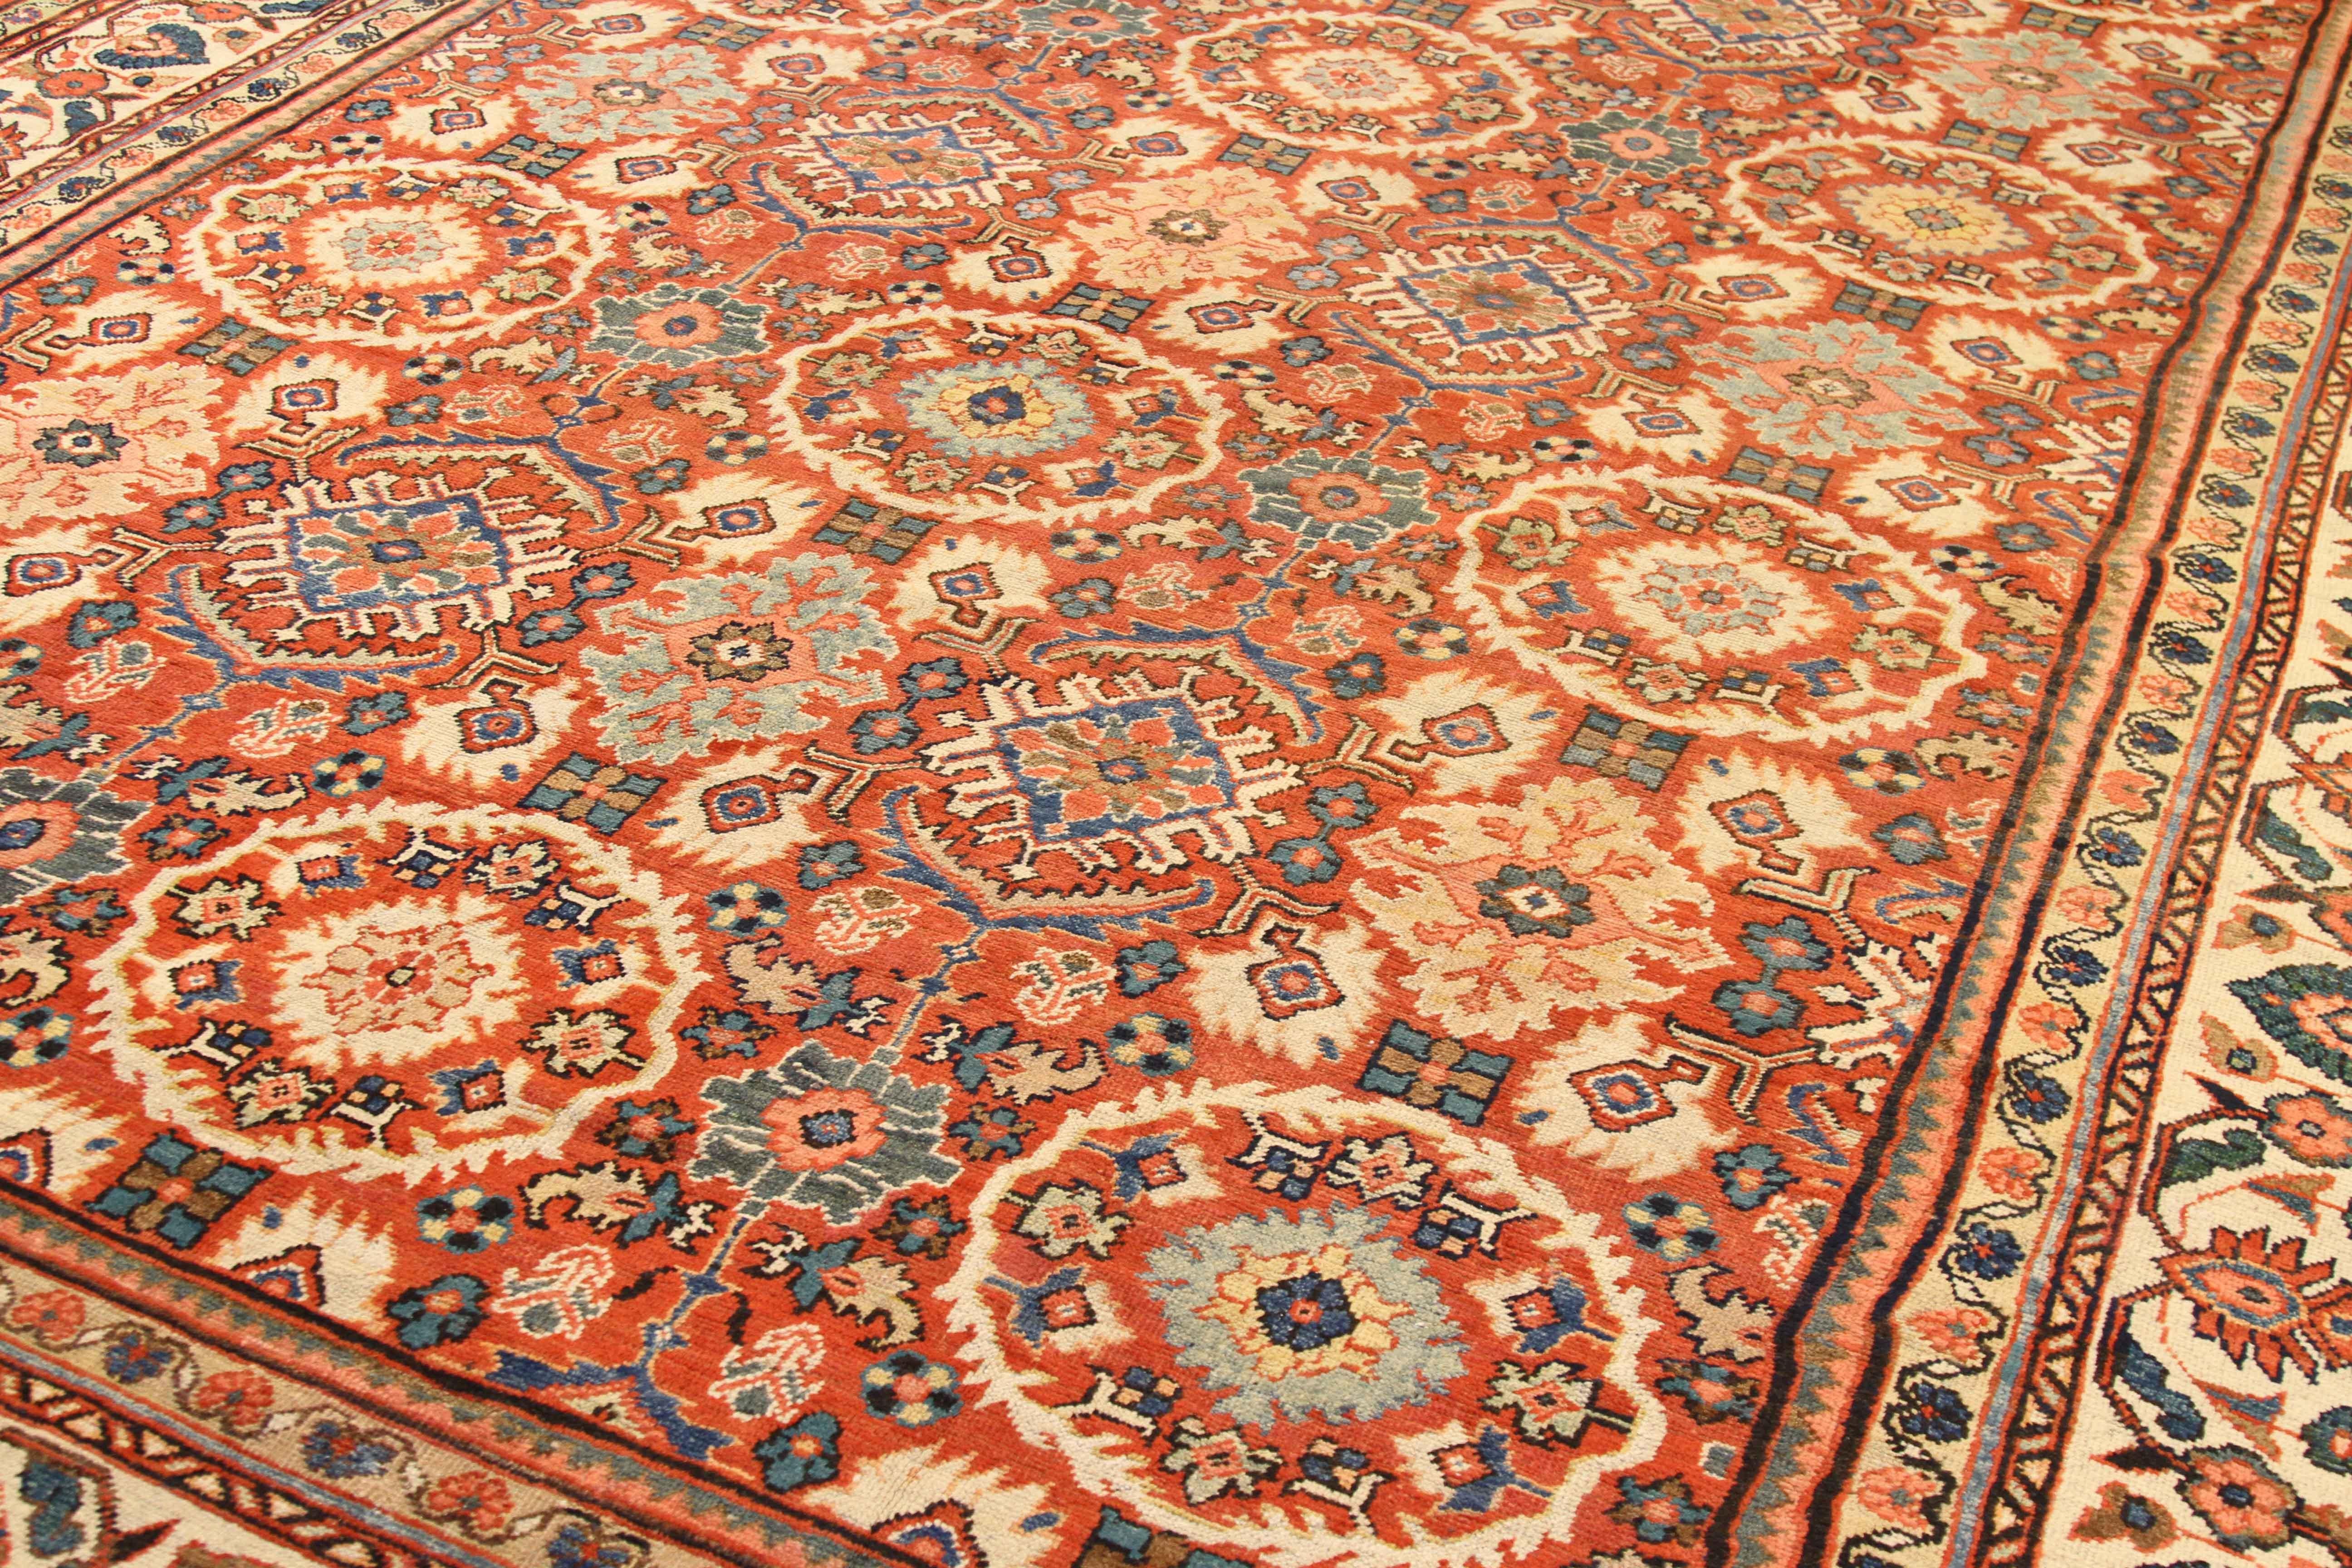 1930s carpet patterns